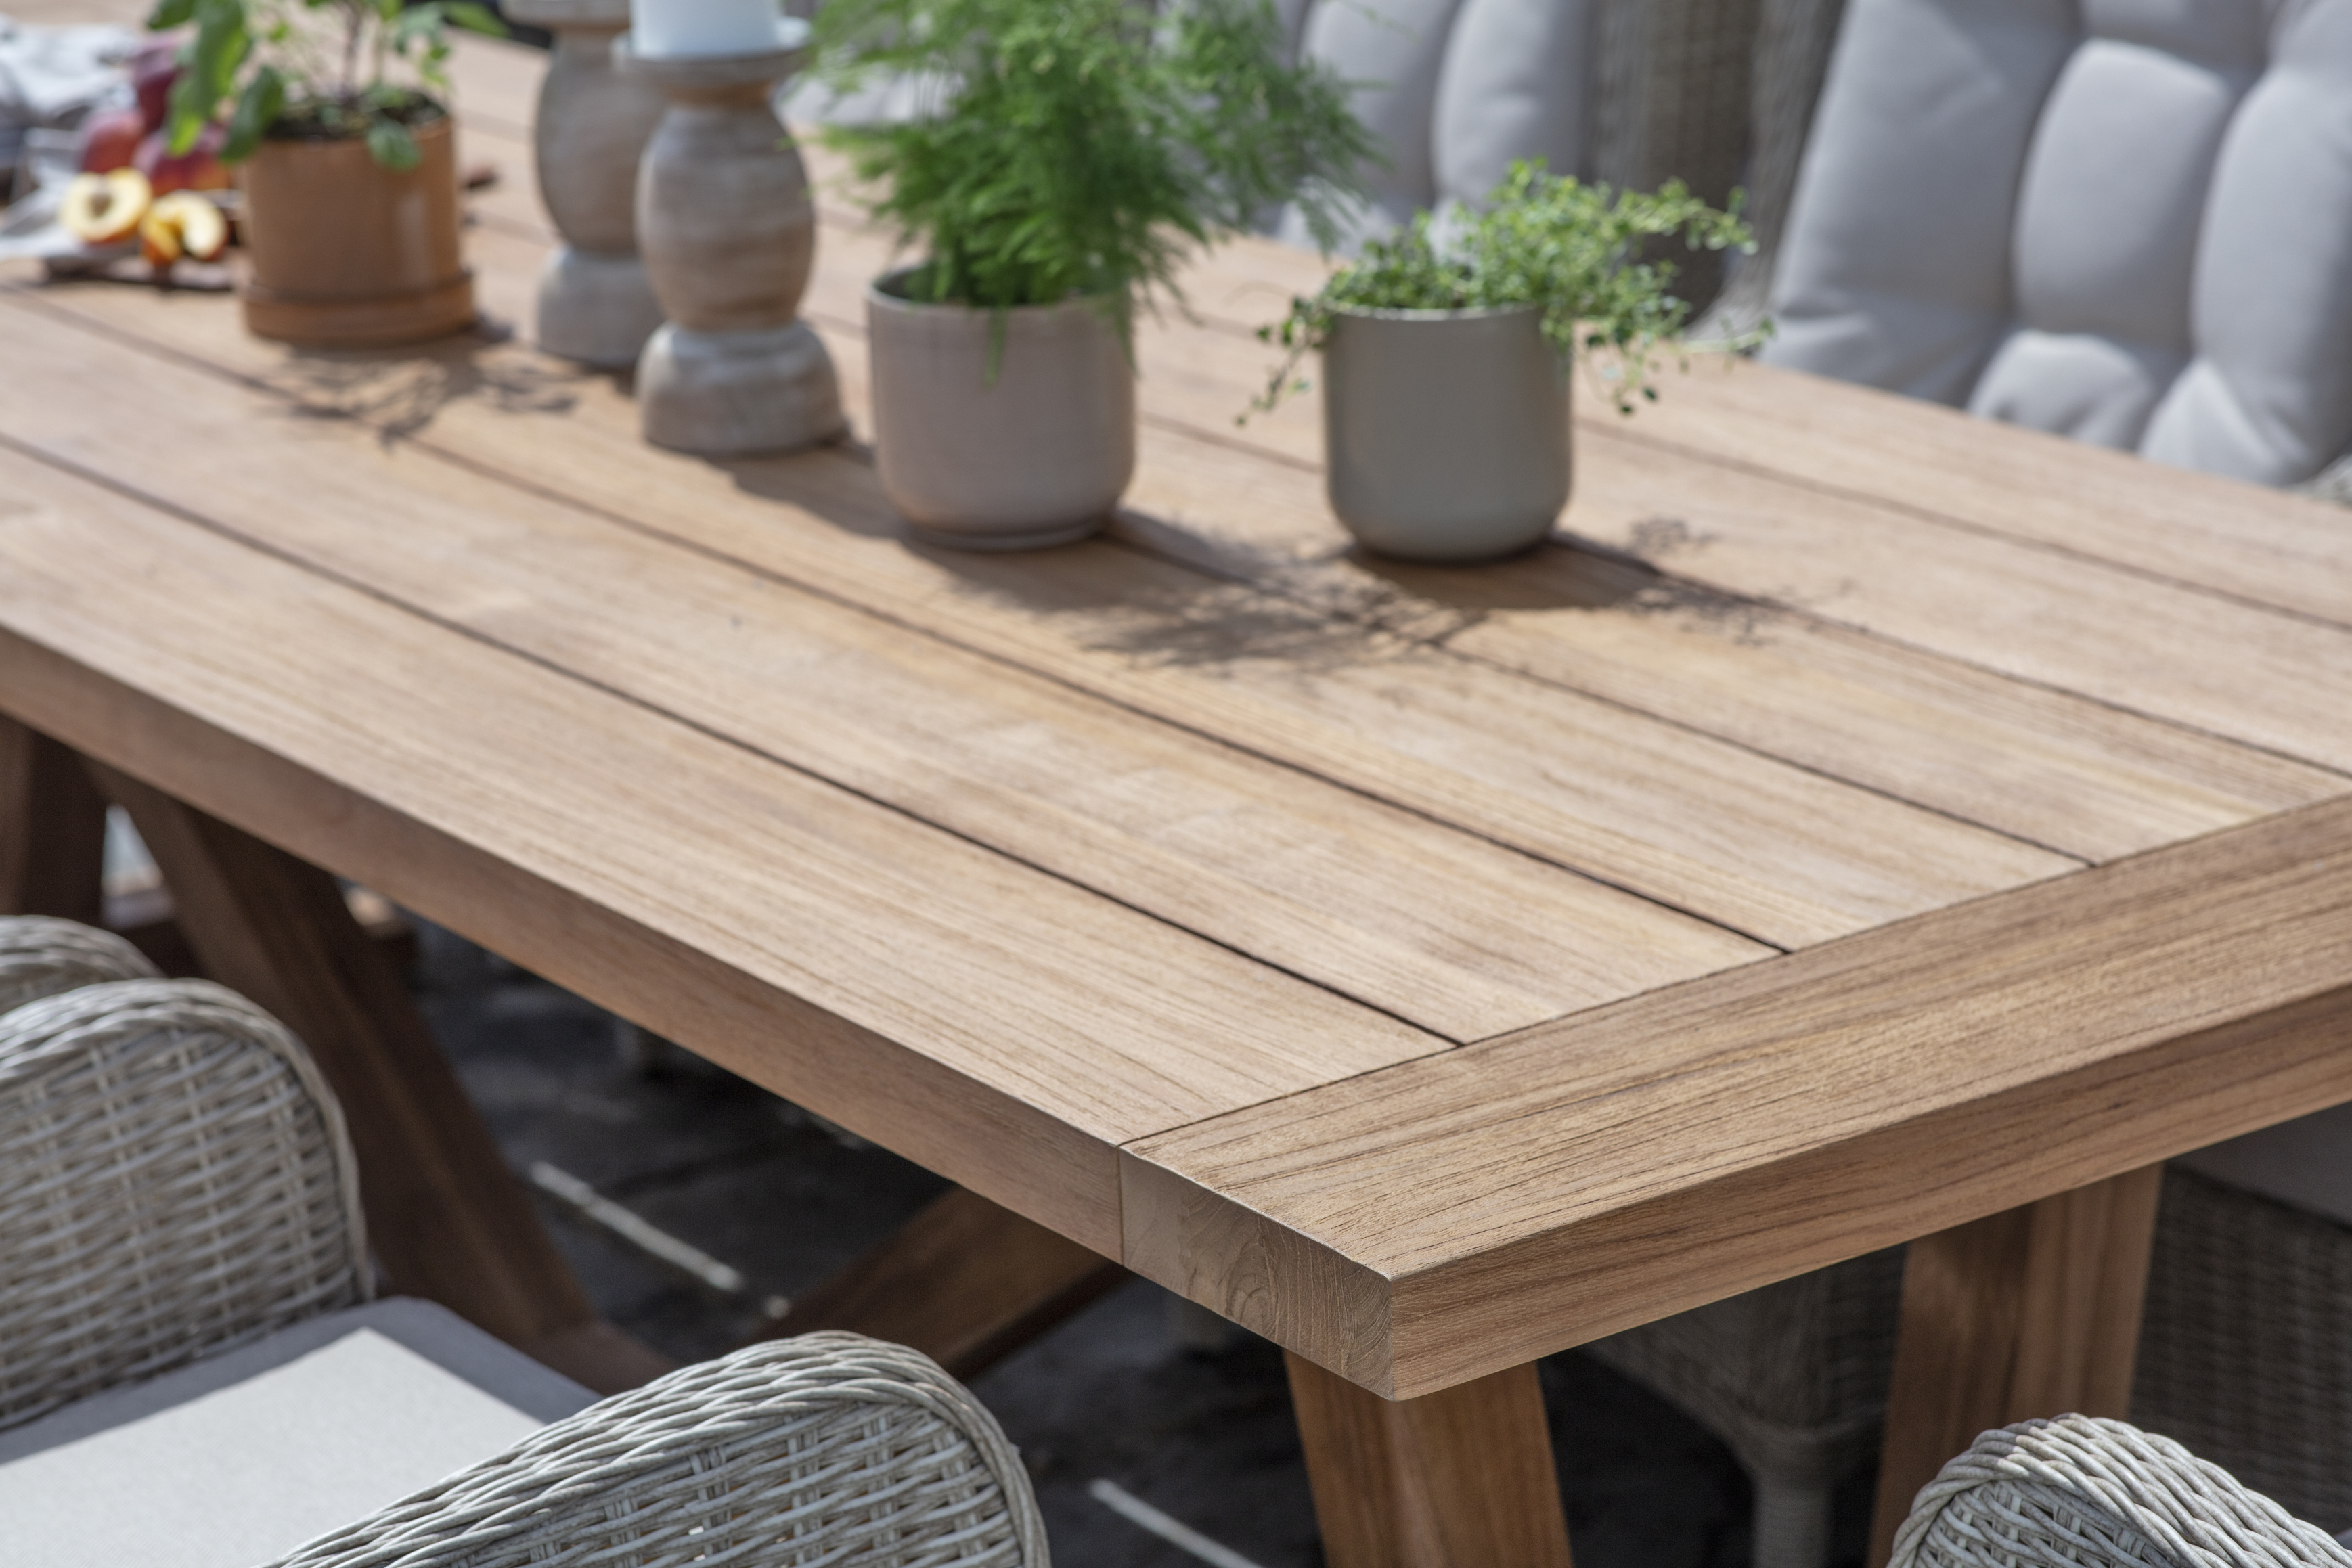 Teak garden table and chairs (Bramblecrest/PA)